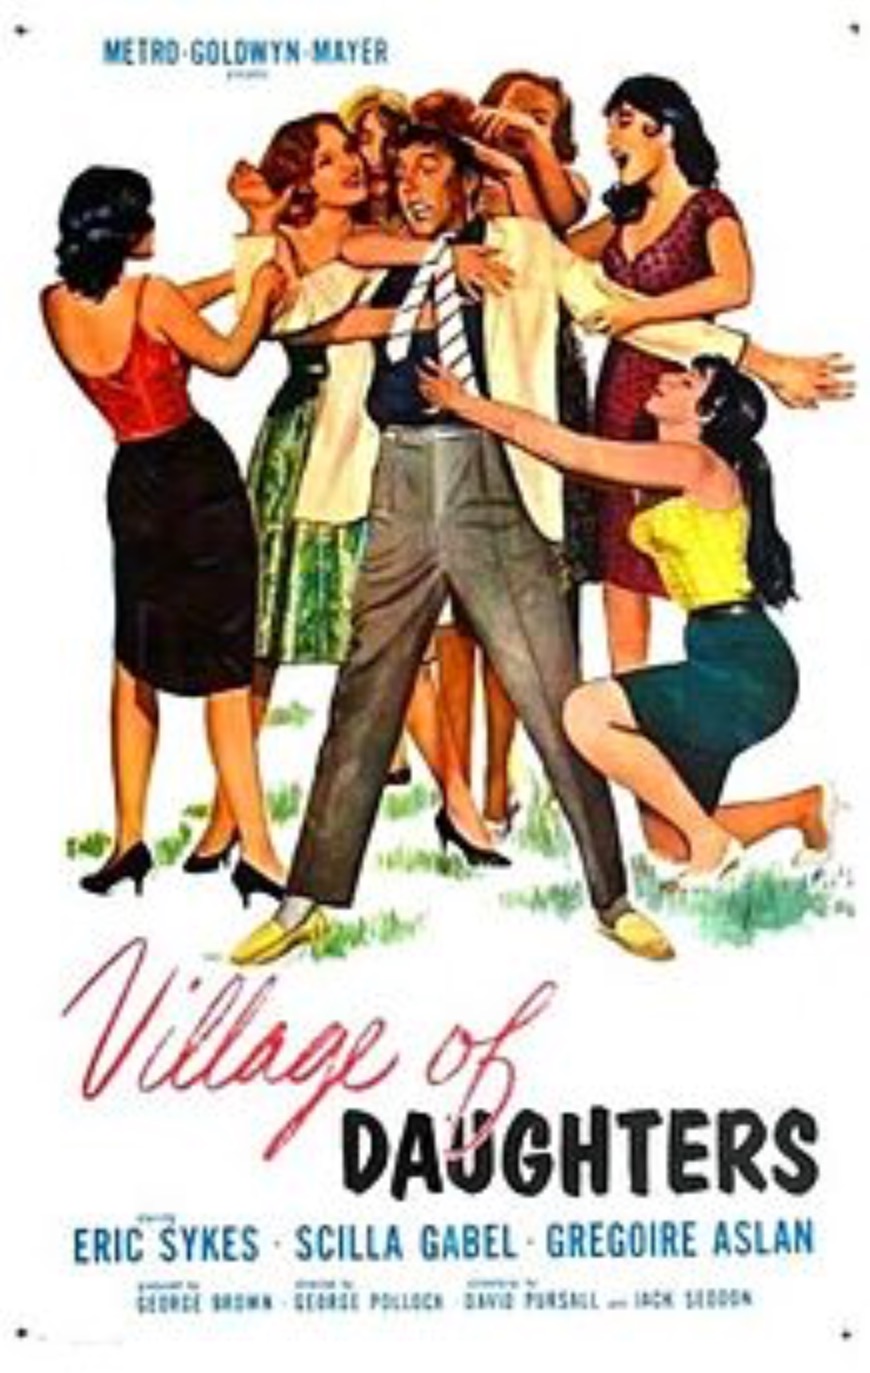 Village of Daughters (1962) Screenshot 2